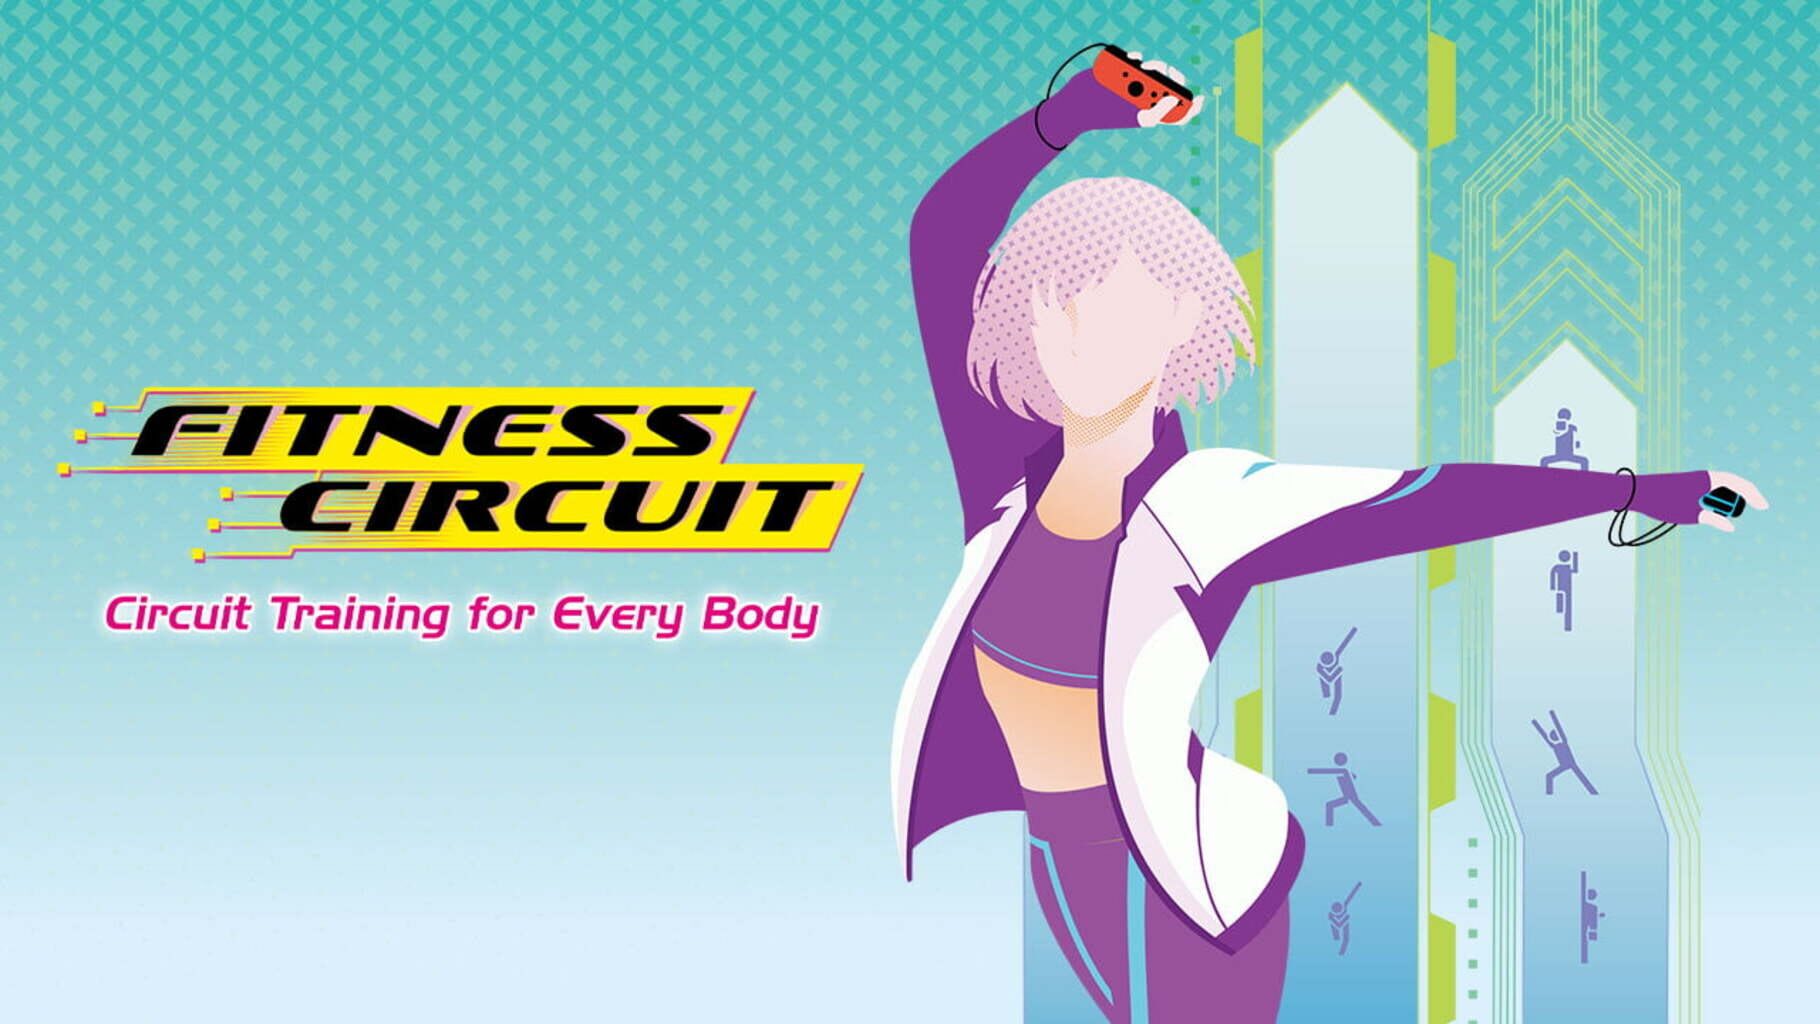 Fitness Circuit artwork